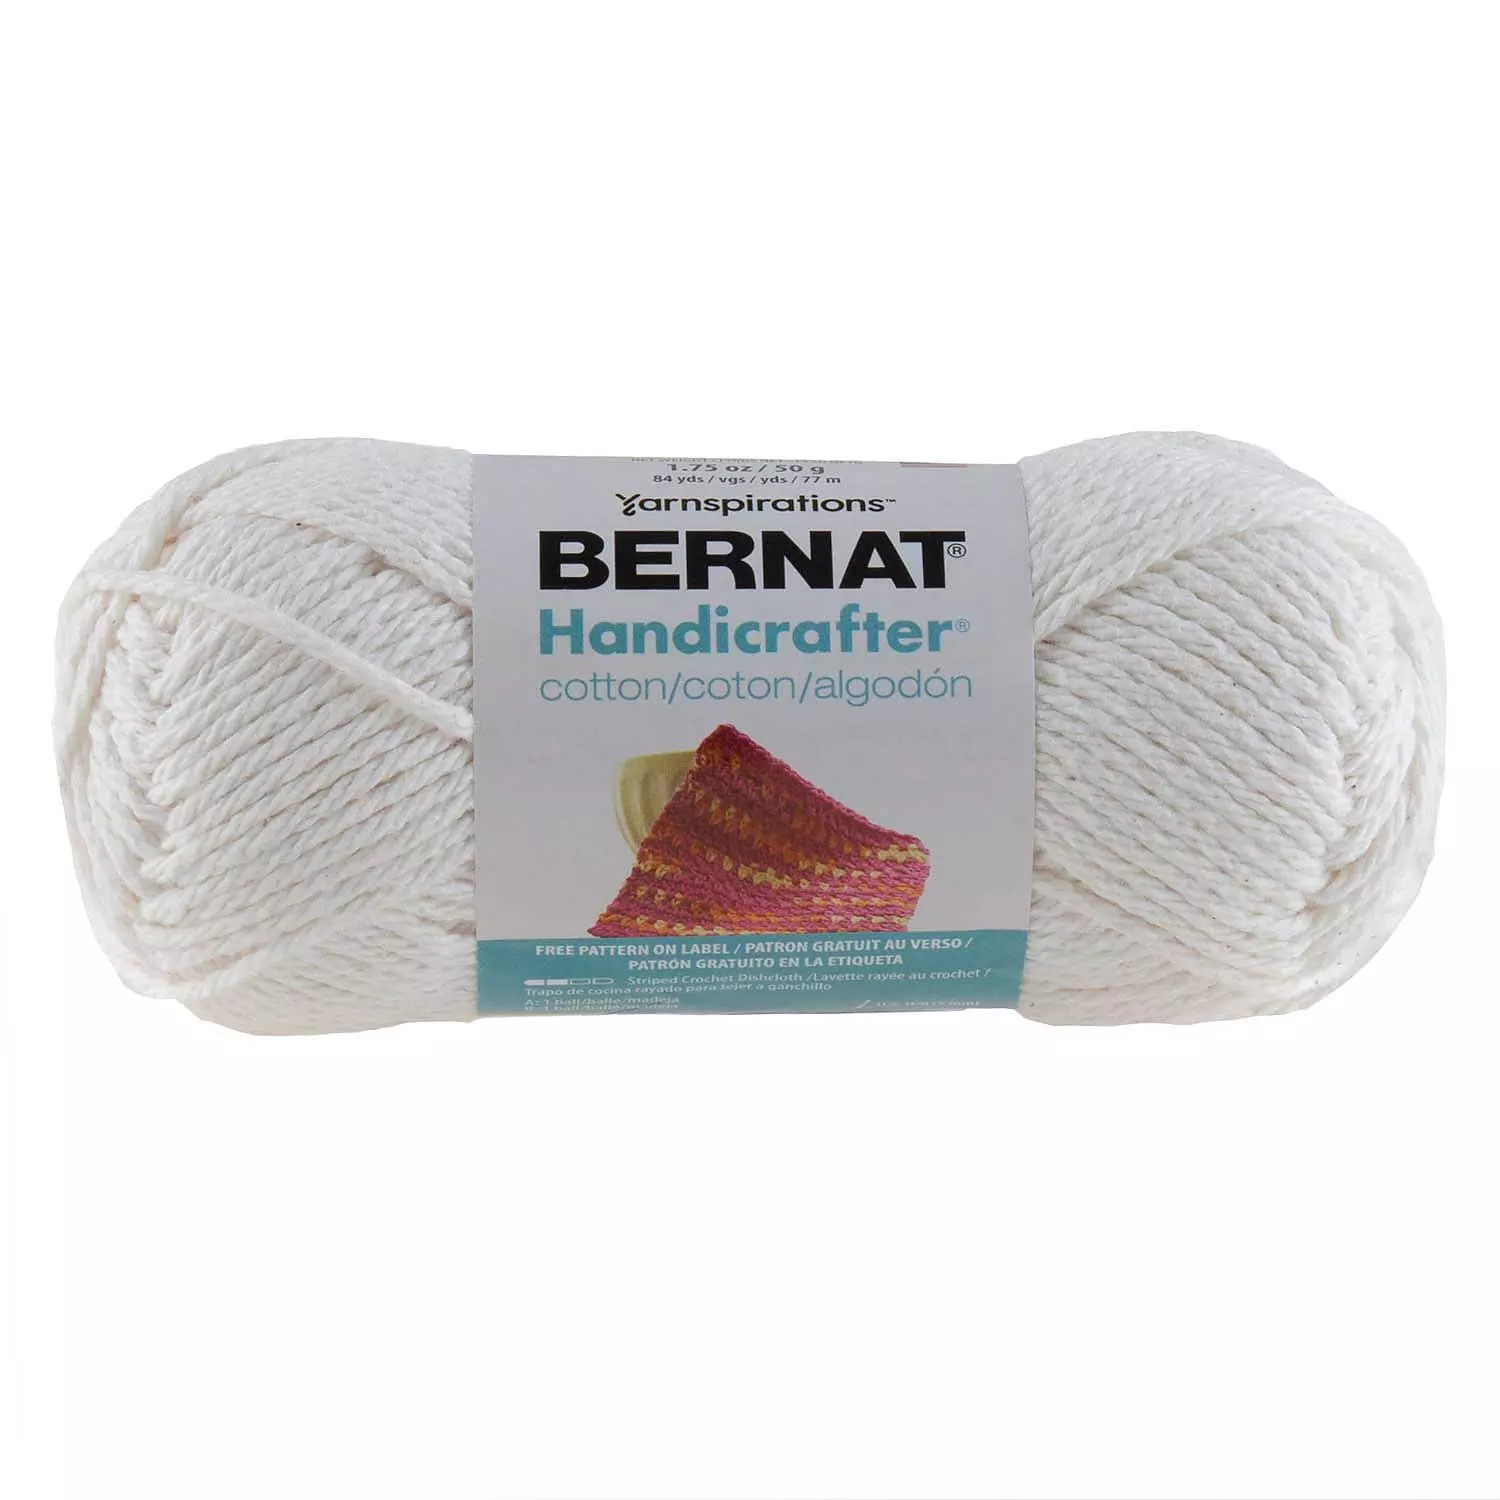 Bernat Handicrafter Cotton Yarn - Big Ball (4 - Medium) By Bernat